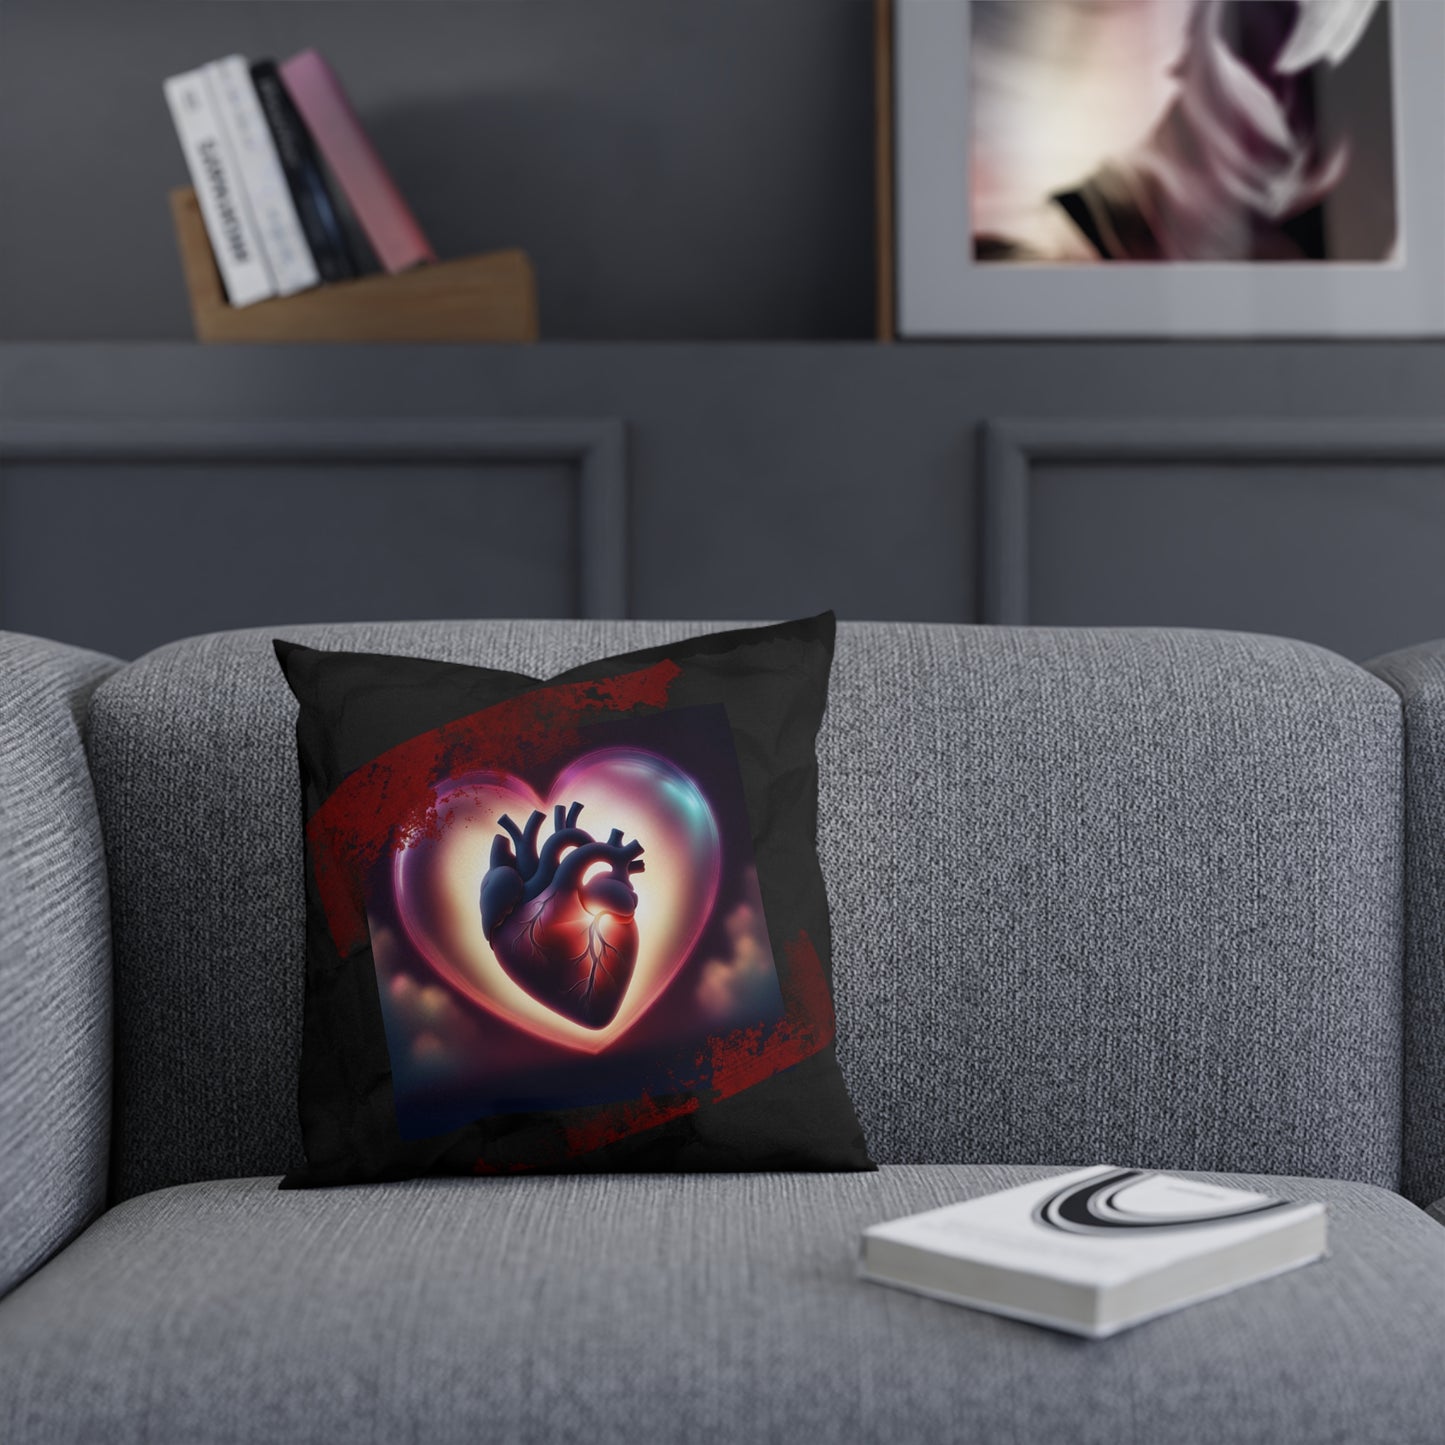 Heart of Heart | Cushion 2 sizes